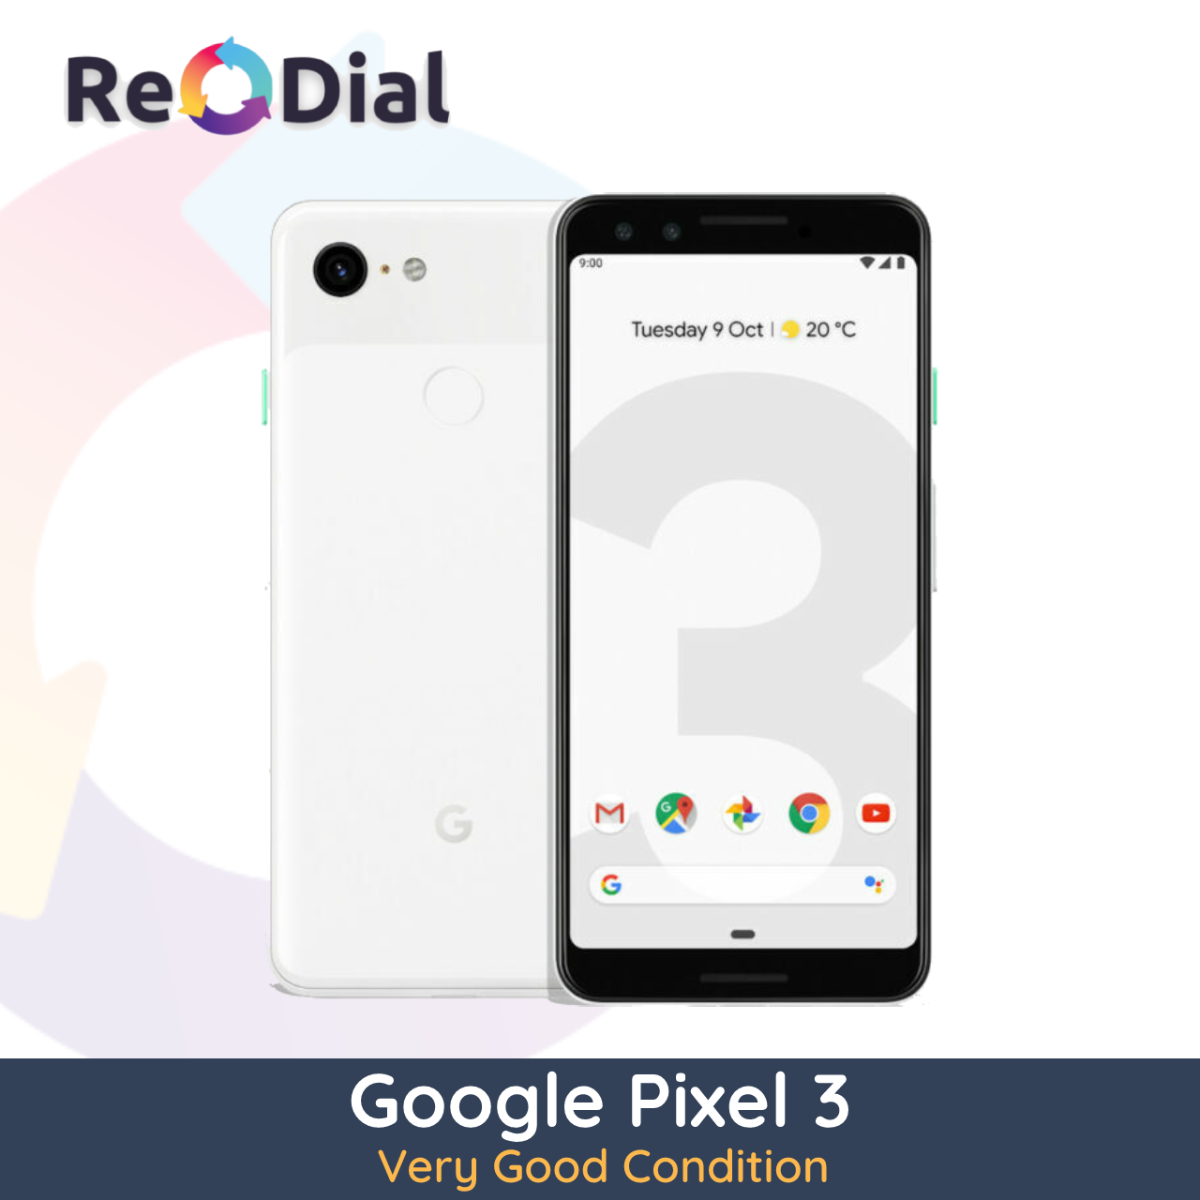 Google Pixel 3 - Very Good Condition